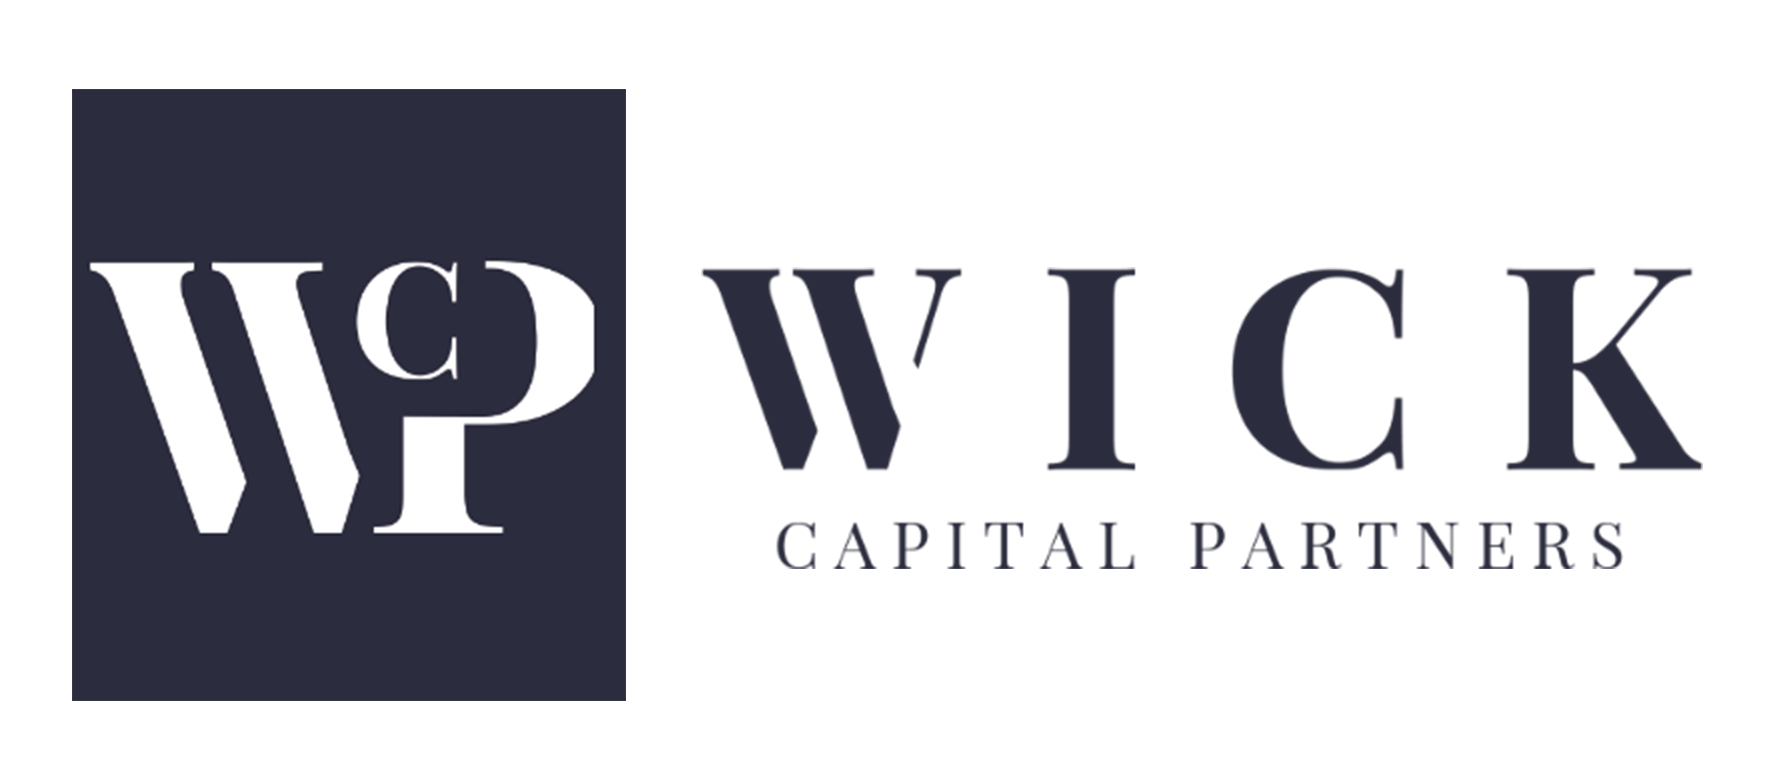 Wick Capital Partners